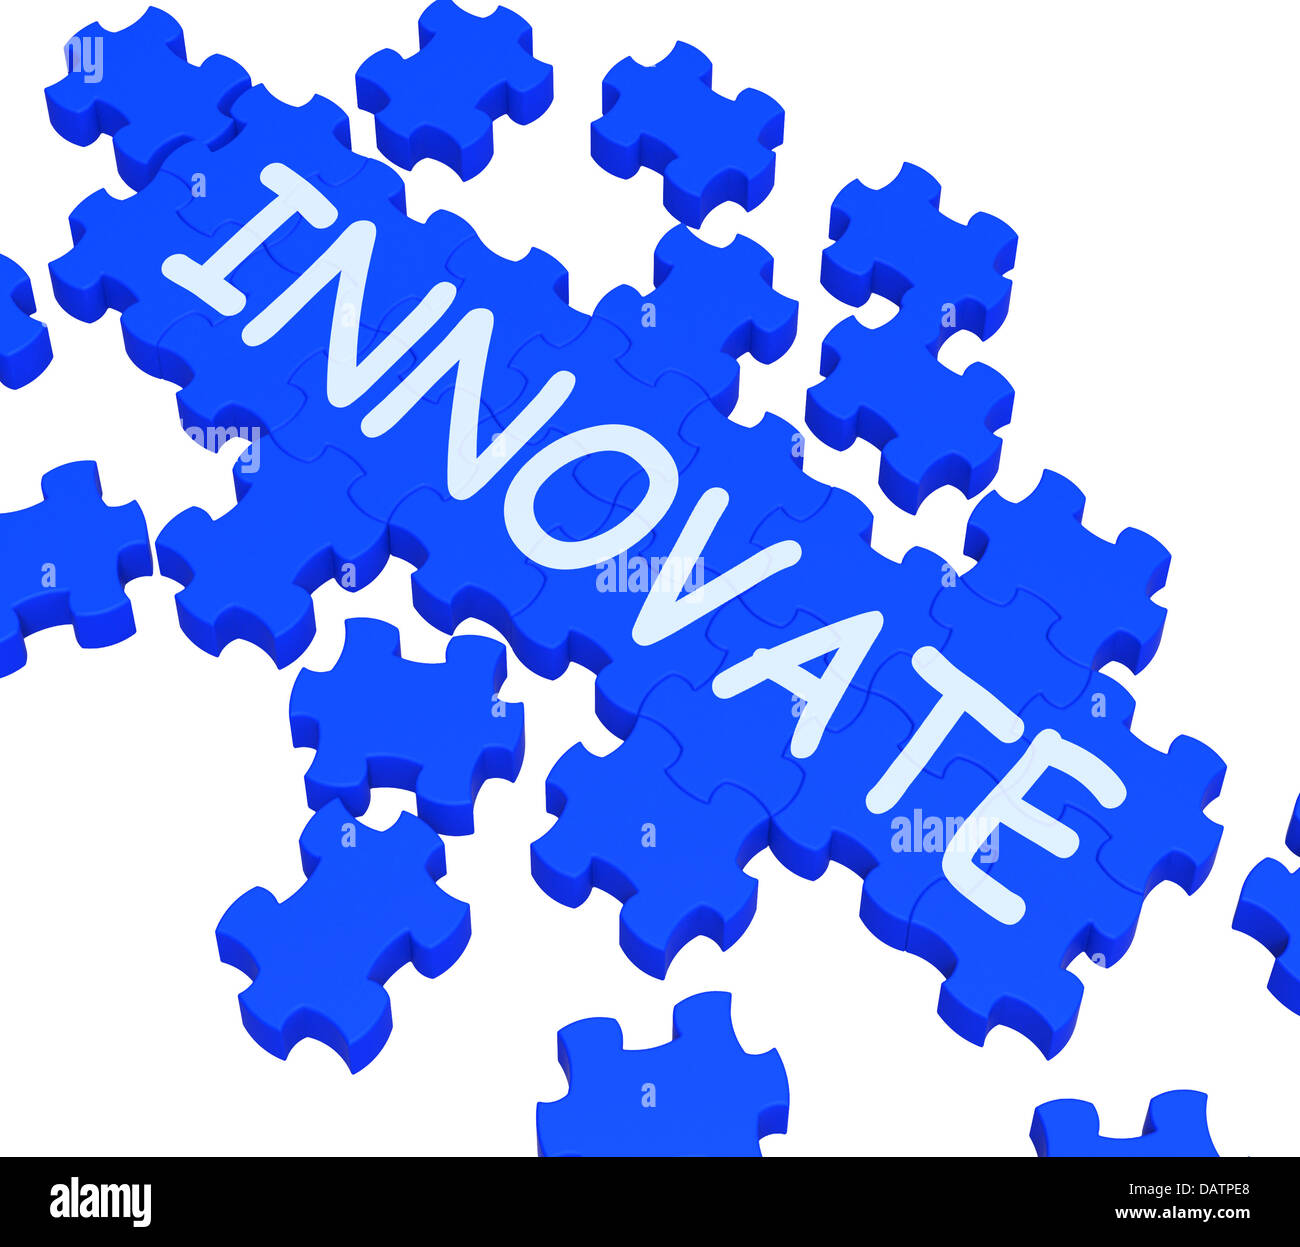 Innovate Puzzle Shows Creative Design Stock Photo